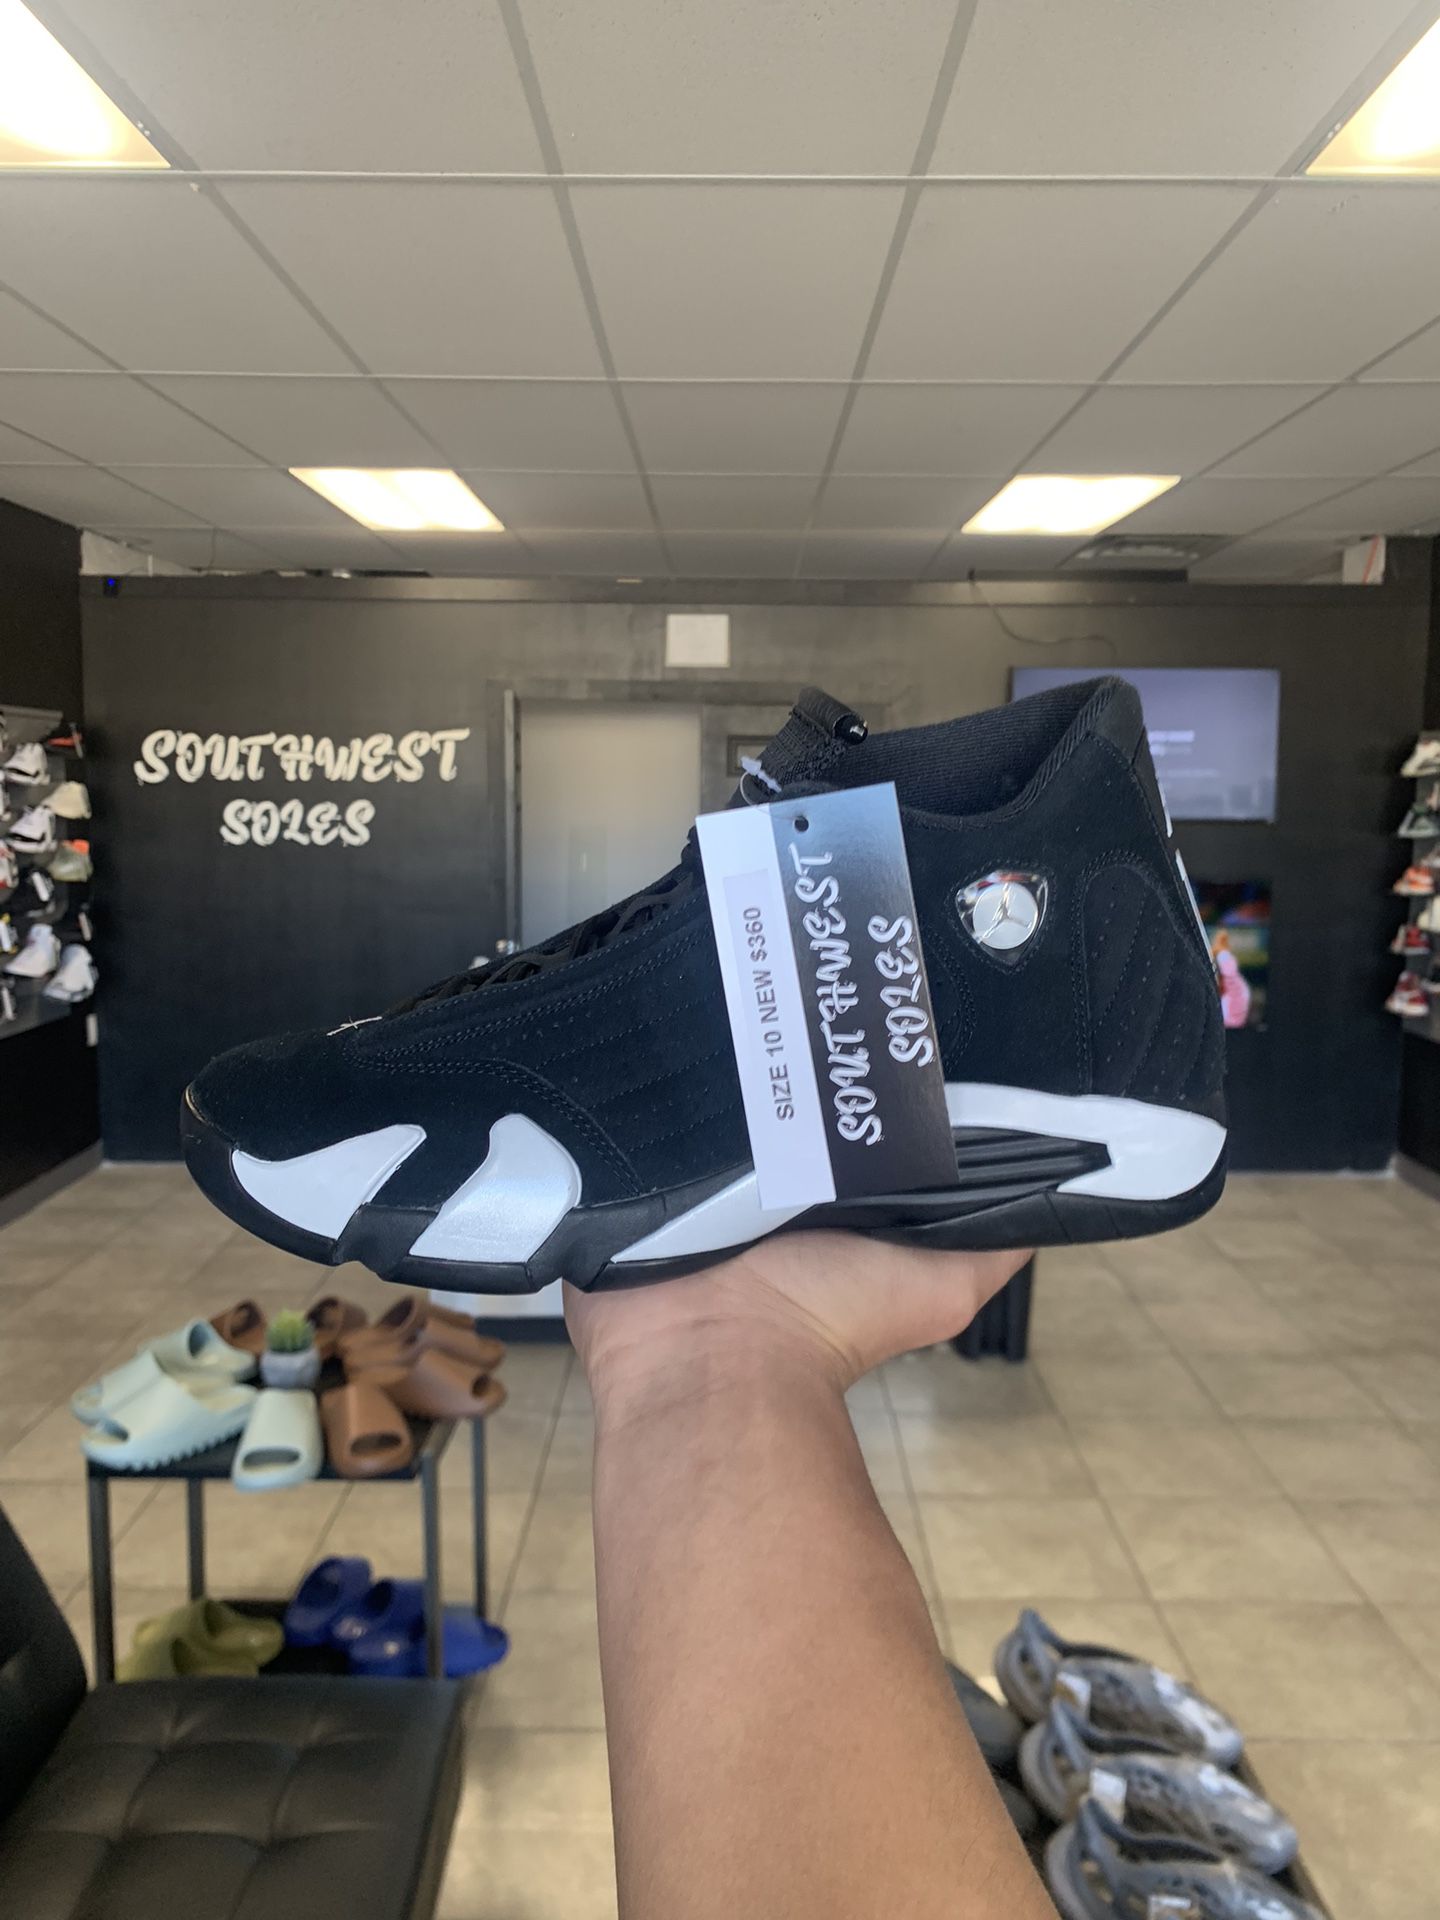 Jordan 14 Black White Size 10 Available In Store!